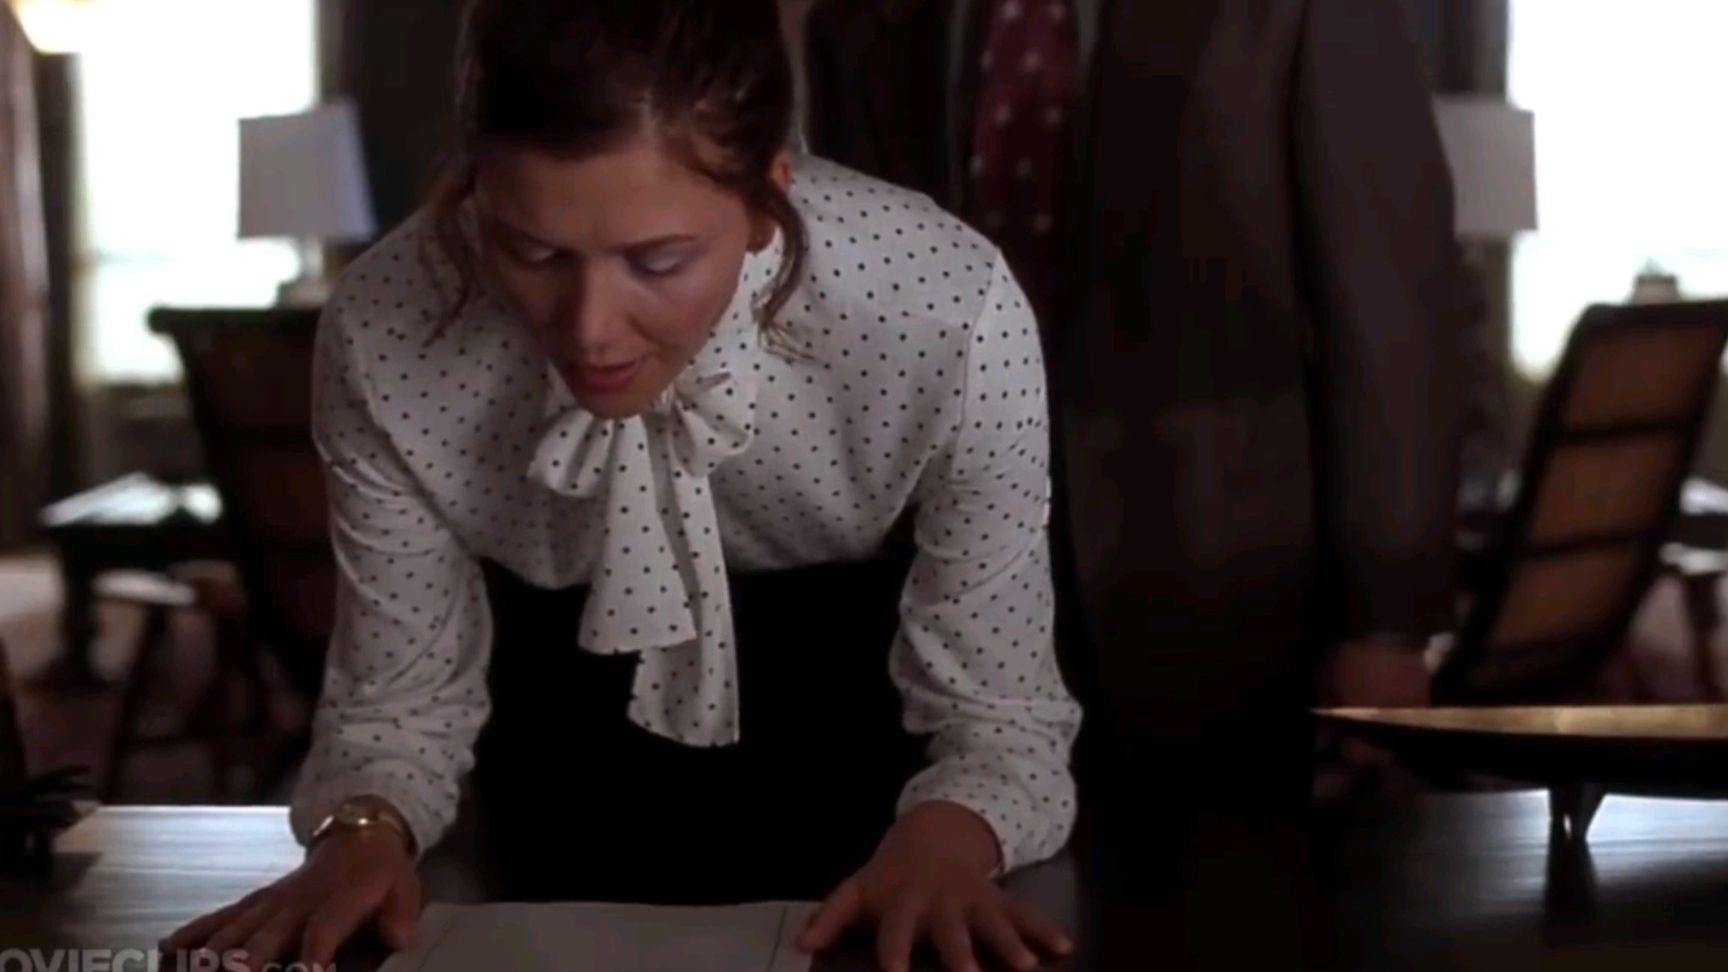 The secretary spanking scene